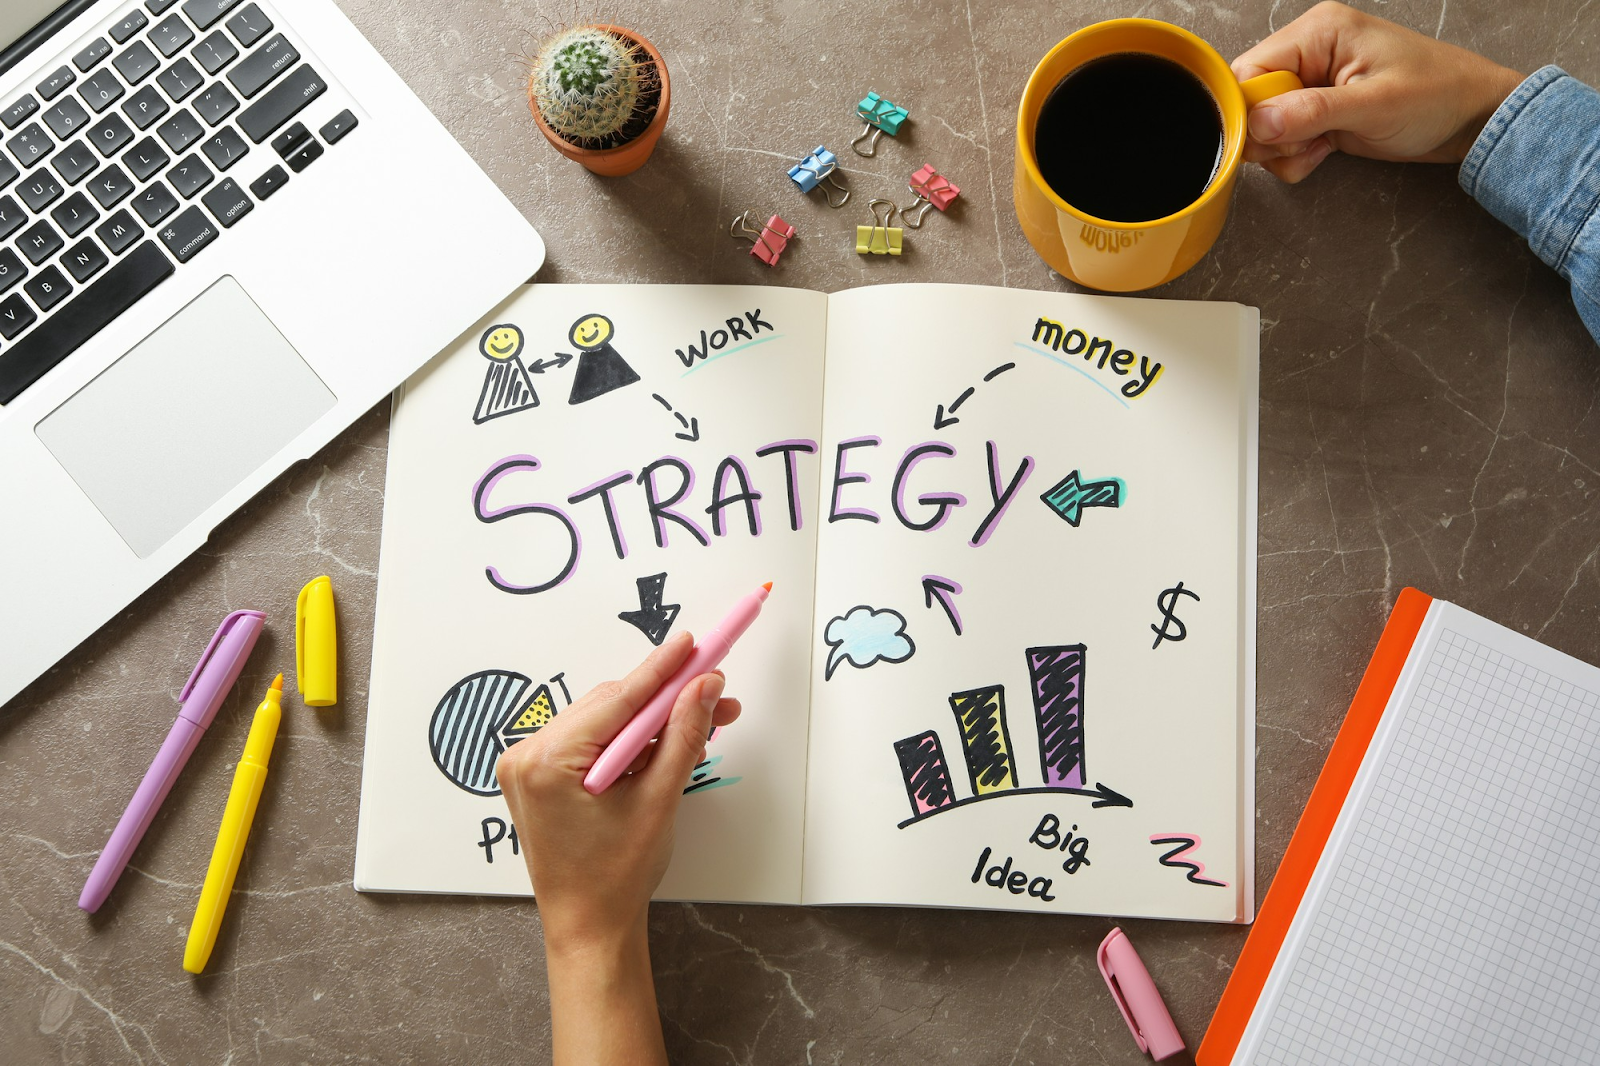 Pentingnya strategi marketing untuk meningkatkan omset
